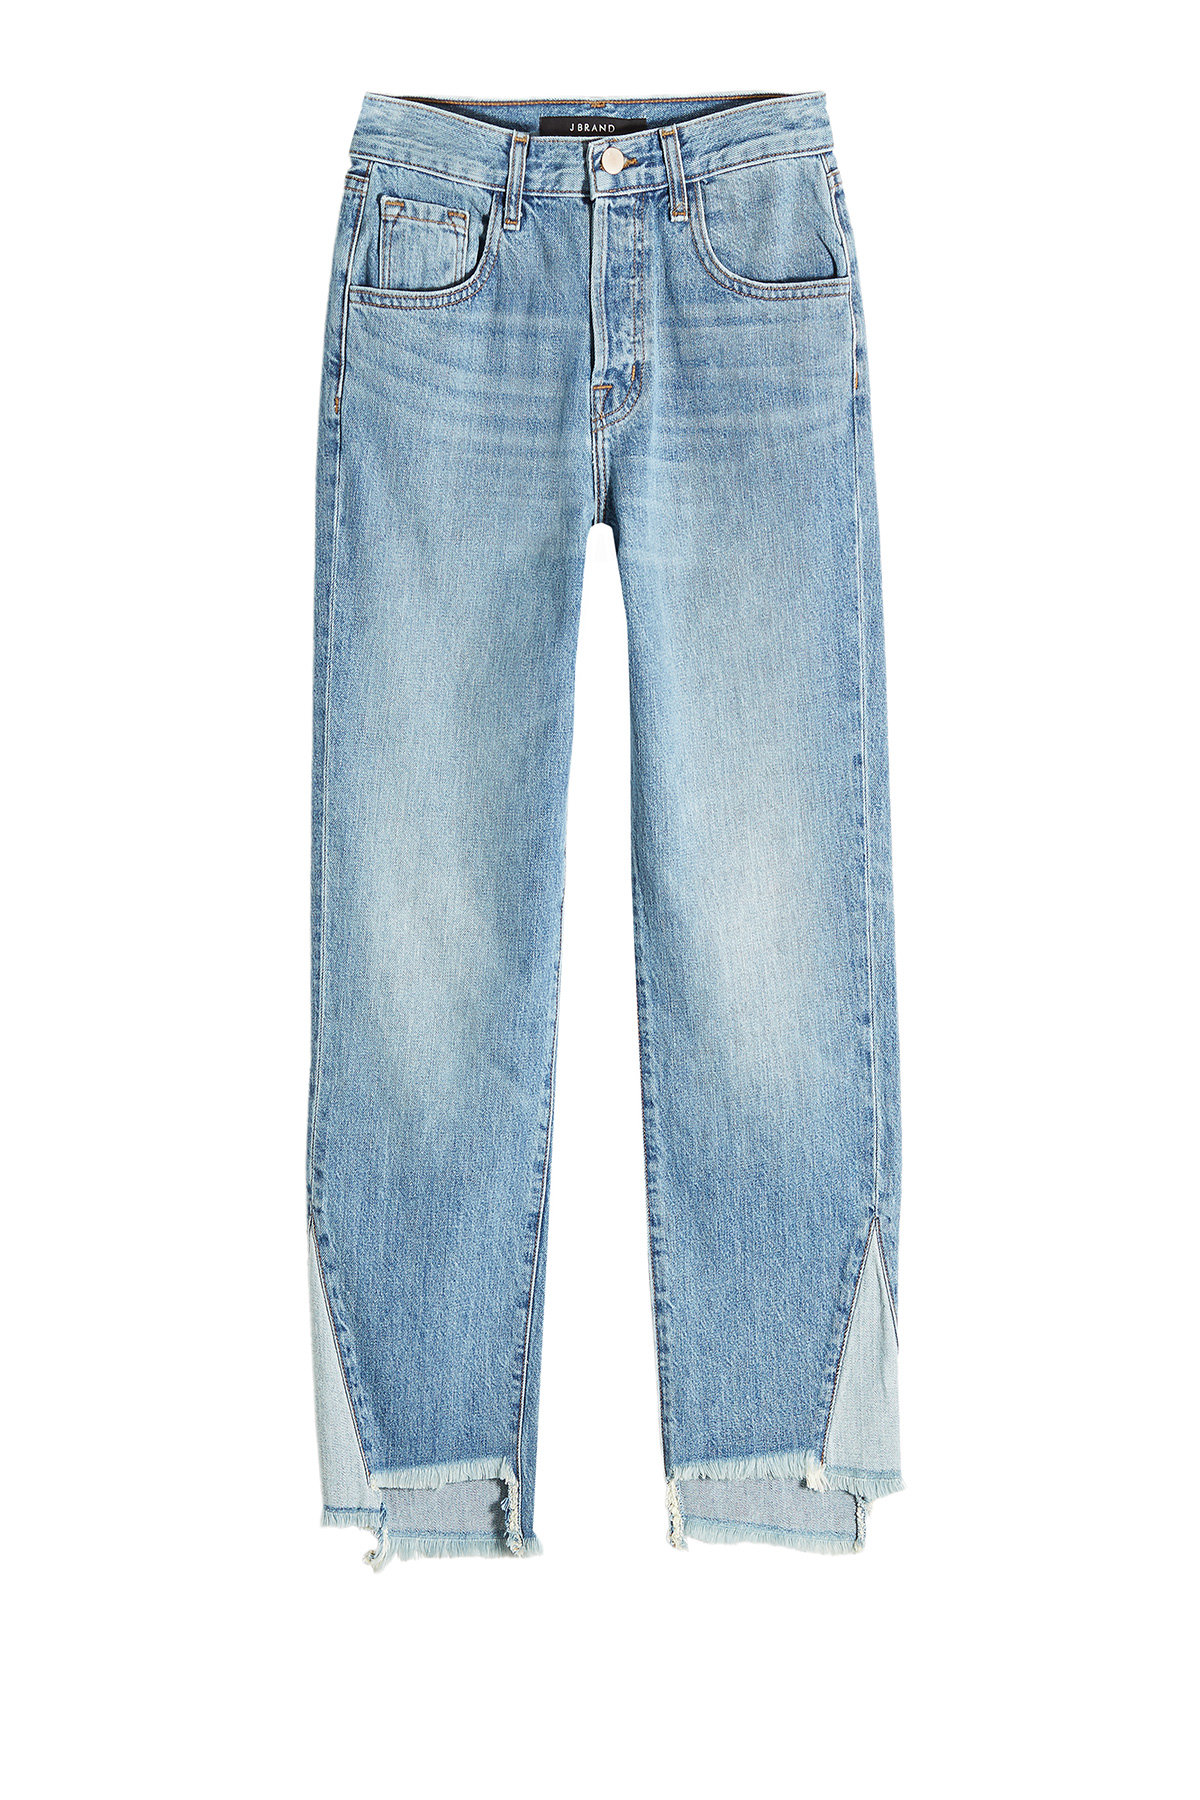 J Brand - Wynne High Rise Cropped Jeans